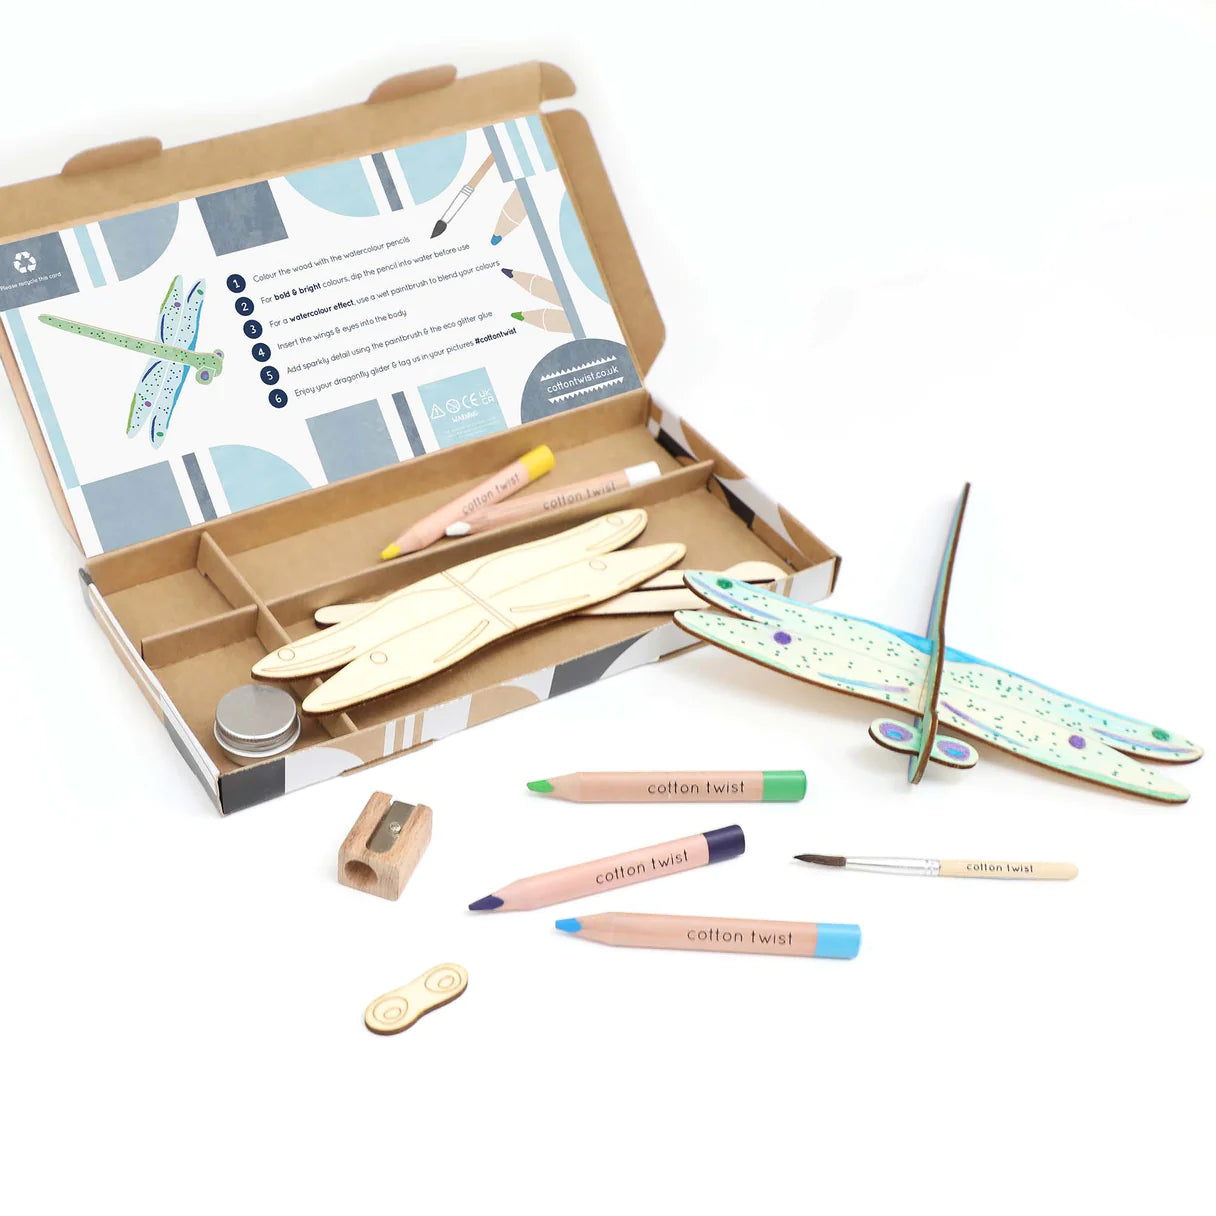 Cotton Twist Craft Kit Activity Box - Dragonfly Glider - Little Reef and Friends